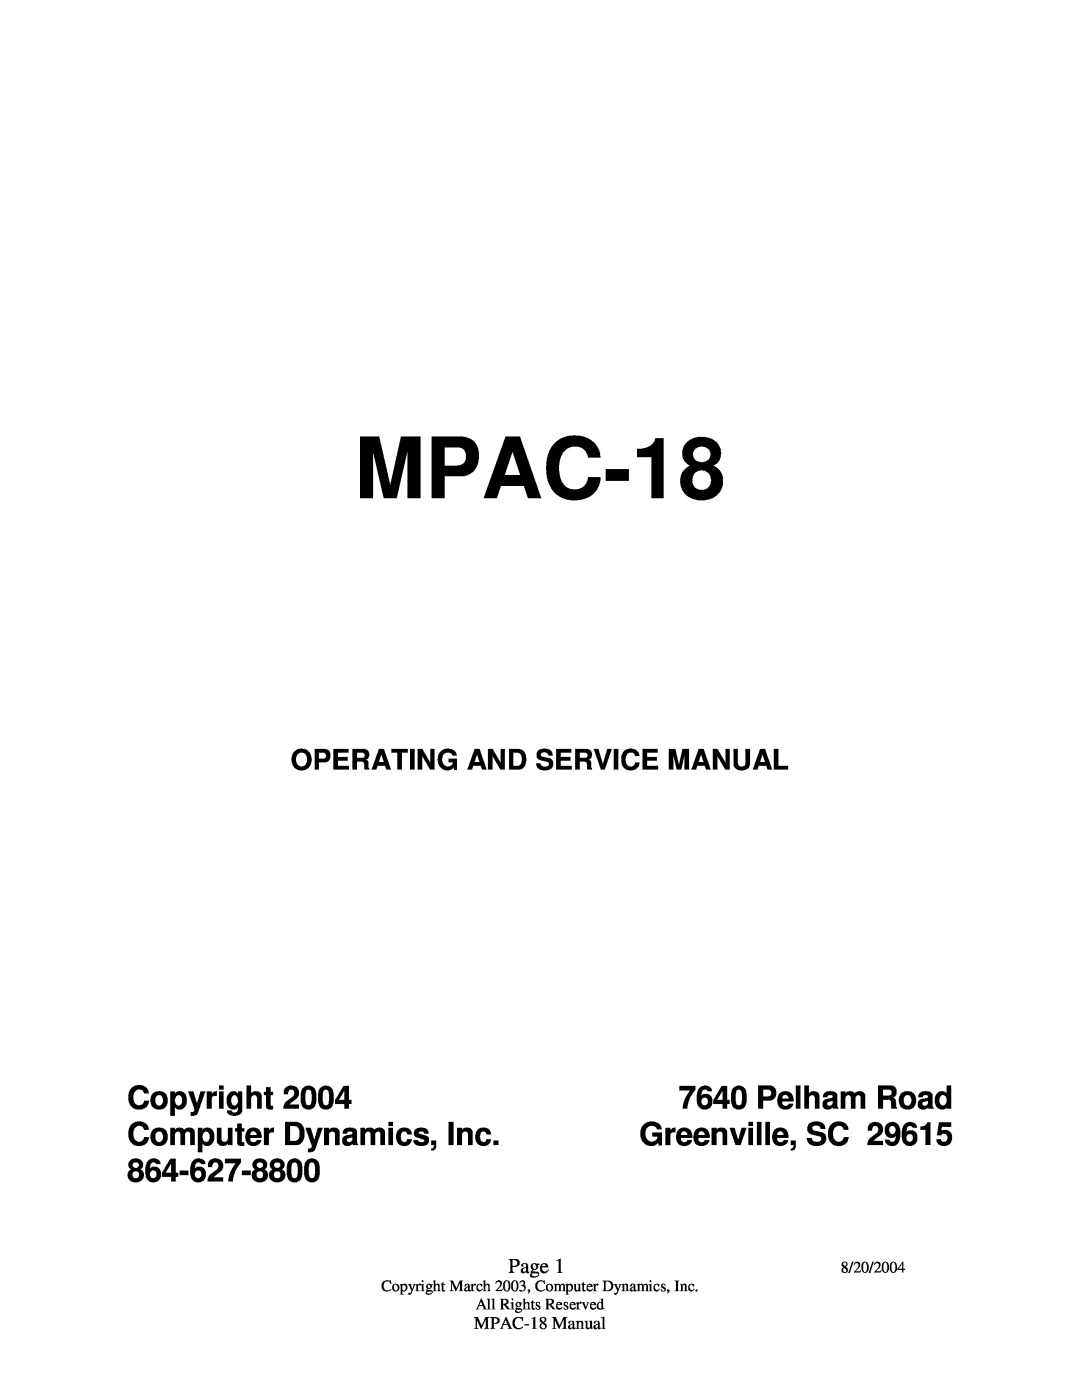 Compaq MPAC-18 manual Operating And Service Manual, Page, Copyright, Pelham Road, Computer Dynamics, Inc, Greenville, SC 